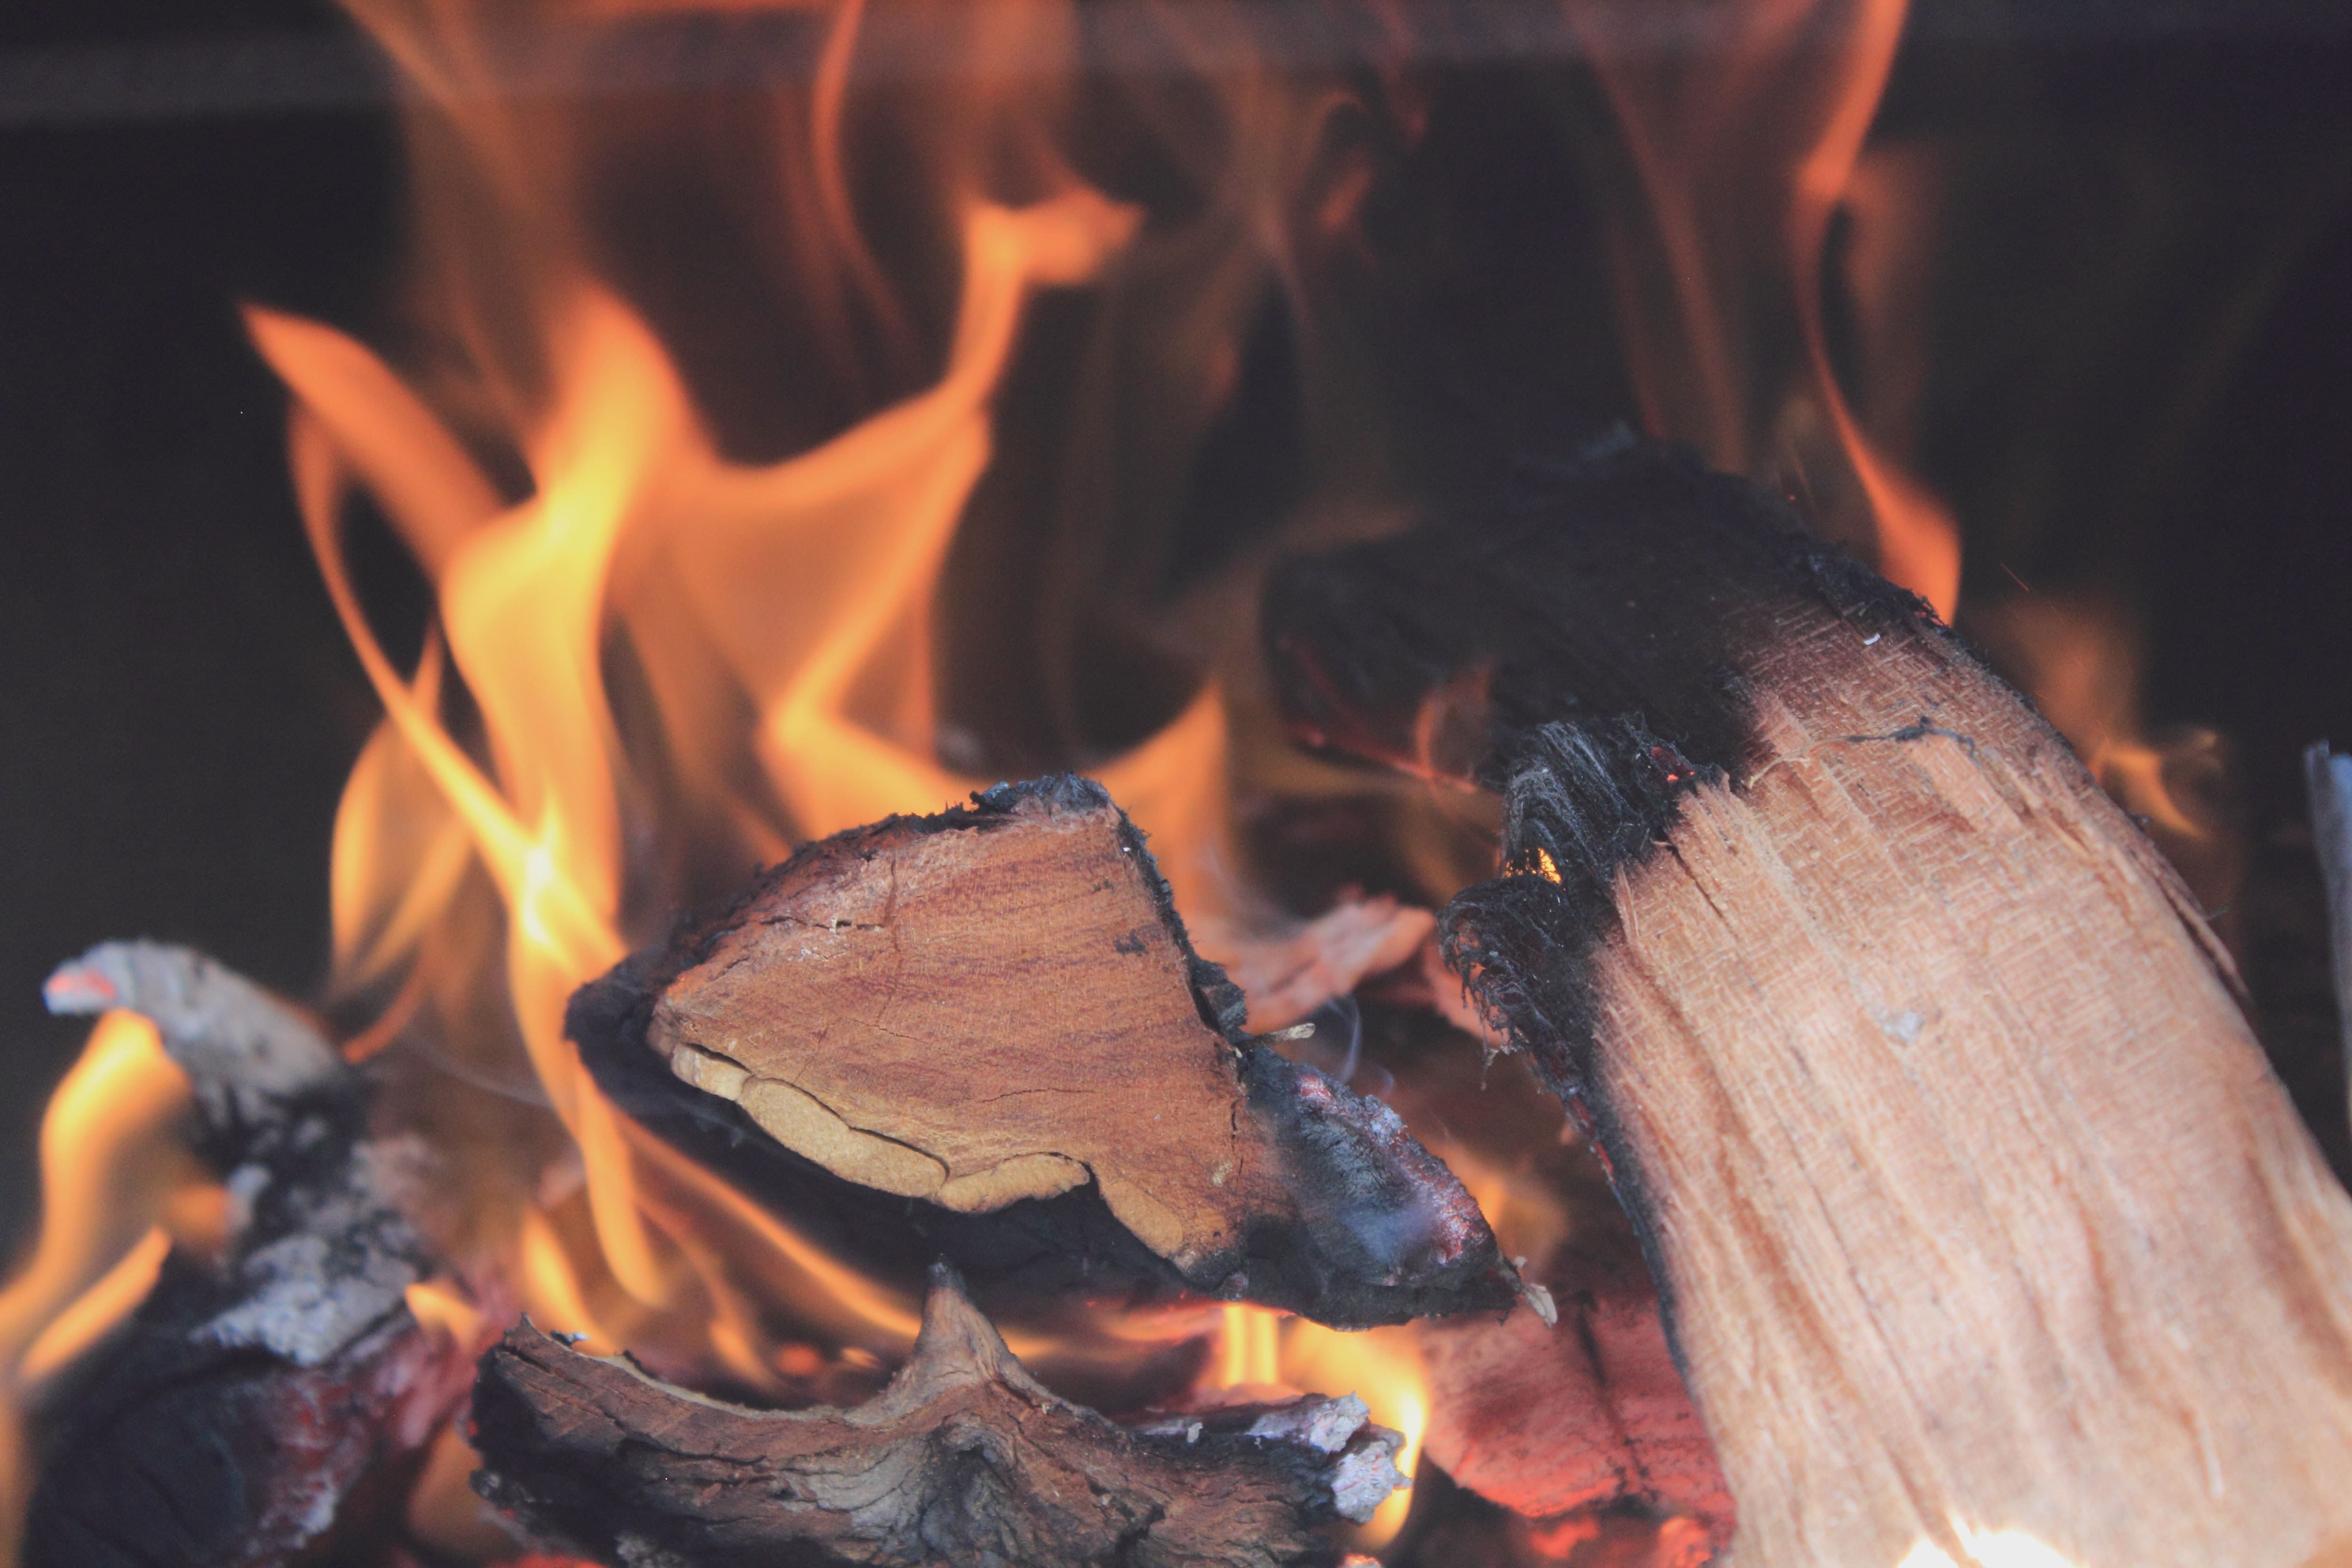 burning firewood with cinnamon sticks - imagination from smelling labdanum